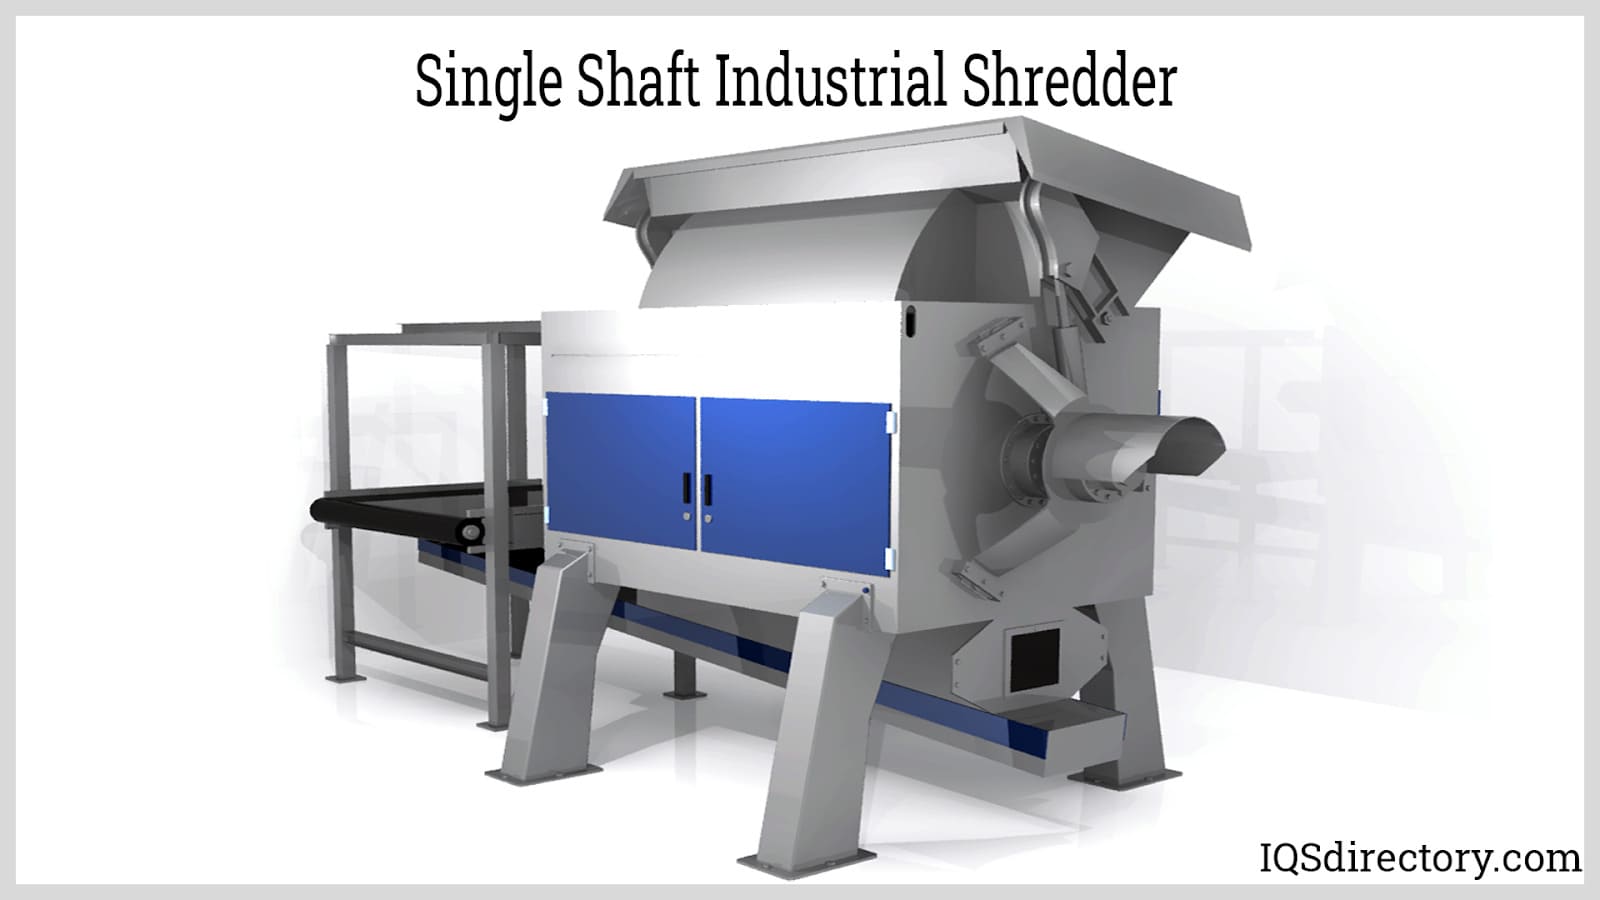 Bulk Waste & Industrial Shredder Motors